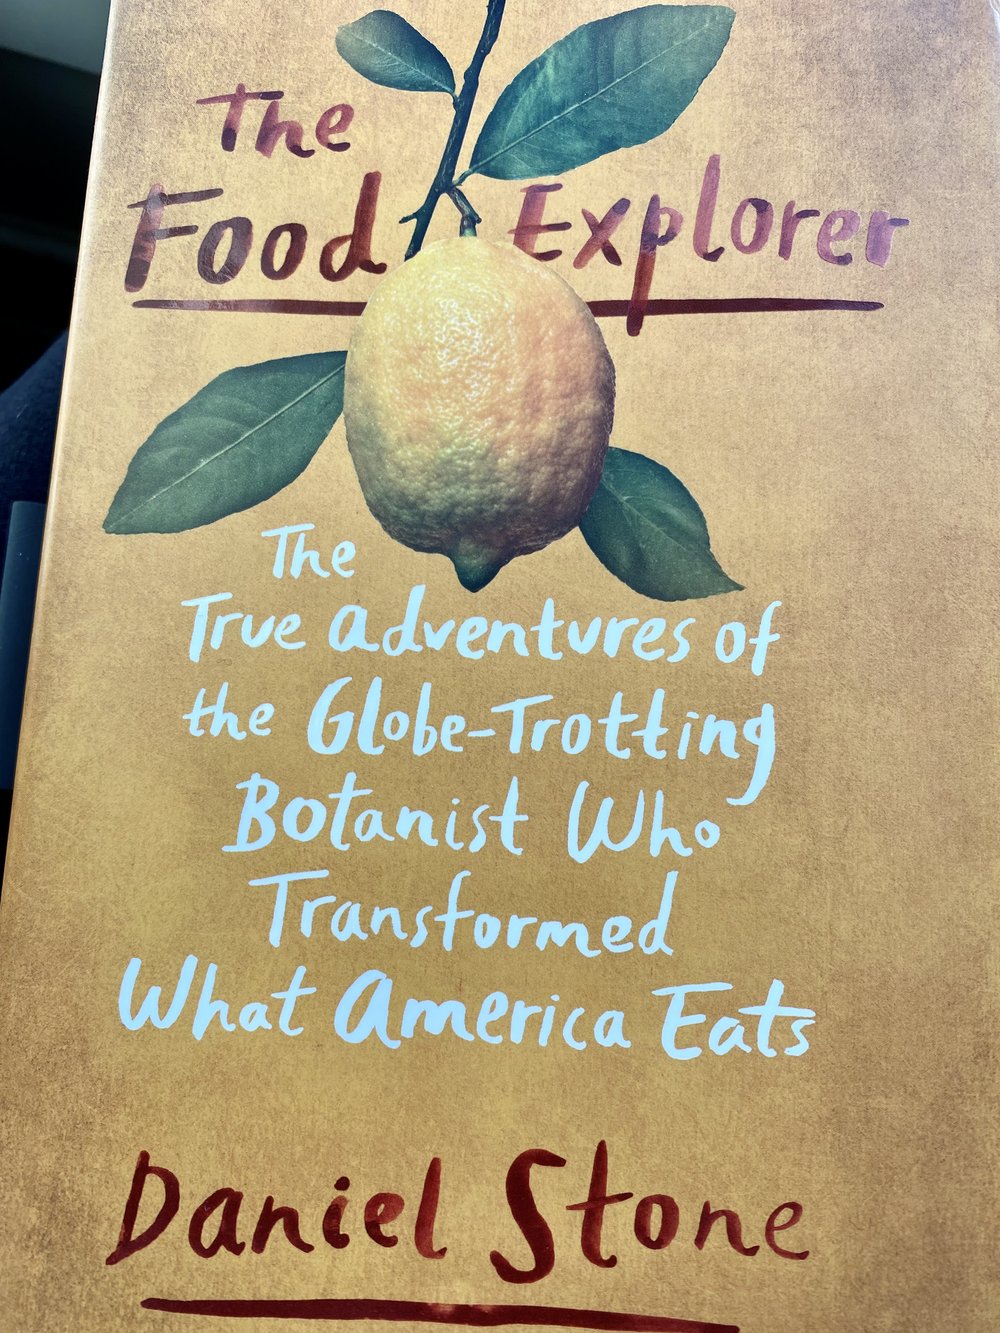 Food-Explore-book.jpg